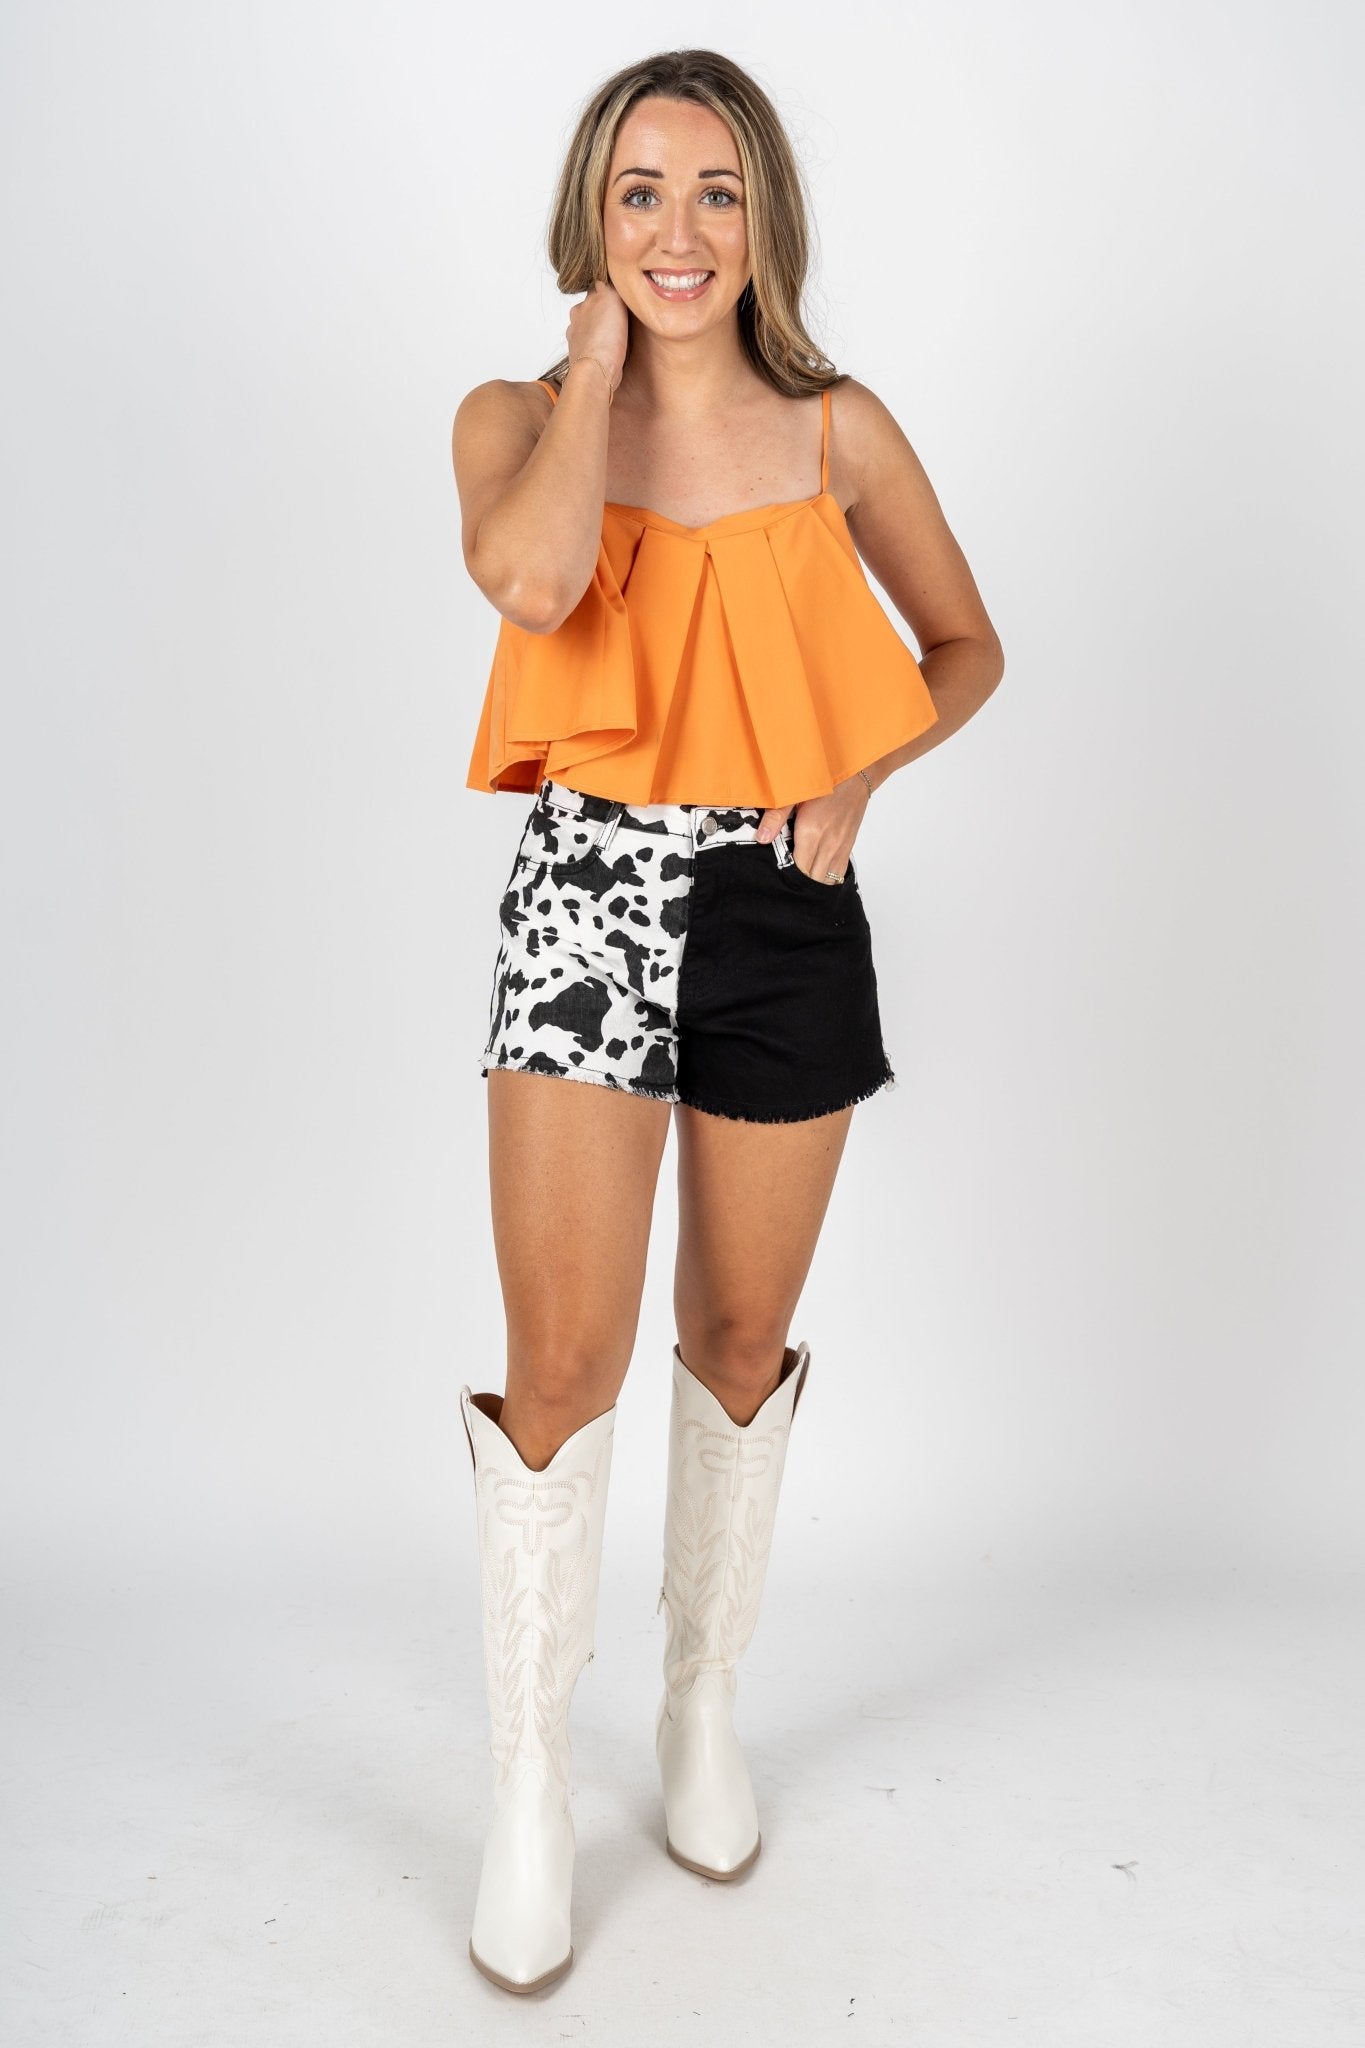 Colorblock cow print shorts white/black - Trendy Shorts - Fashion Shorts at Lush Fashion Lounge Boutique in Oklahoma City